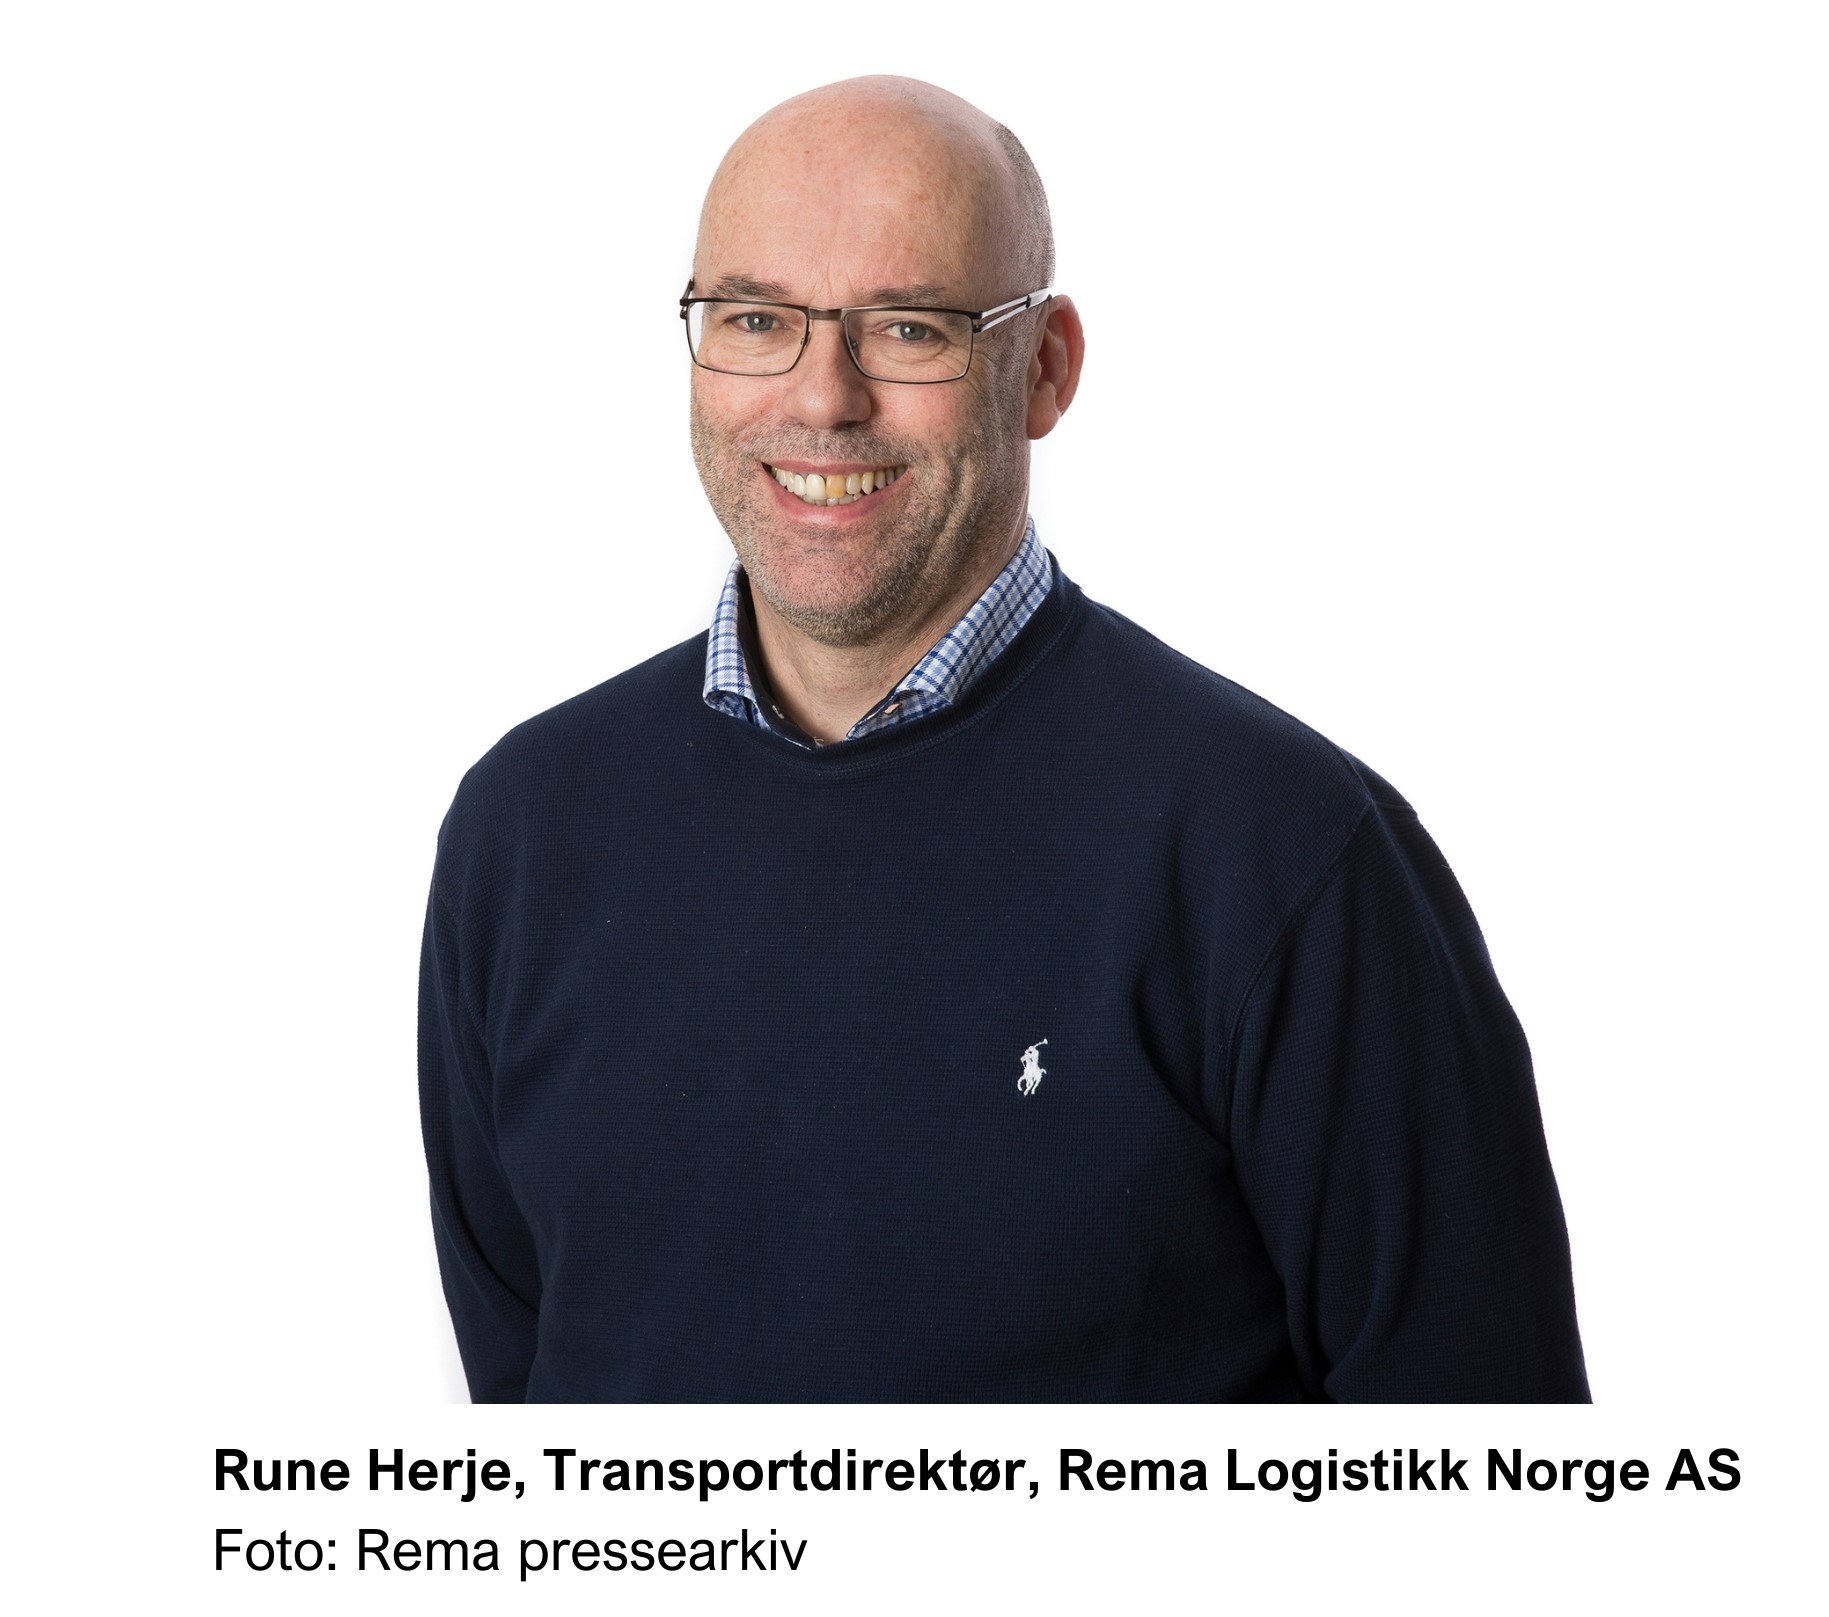 Rune Herje - Transportdirektør, Rema Distribusjon Norge AS